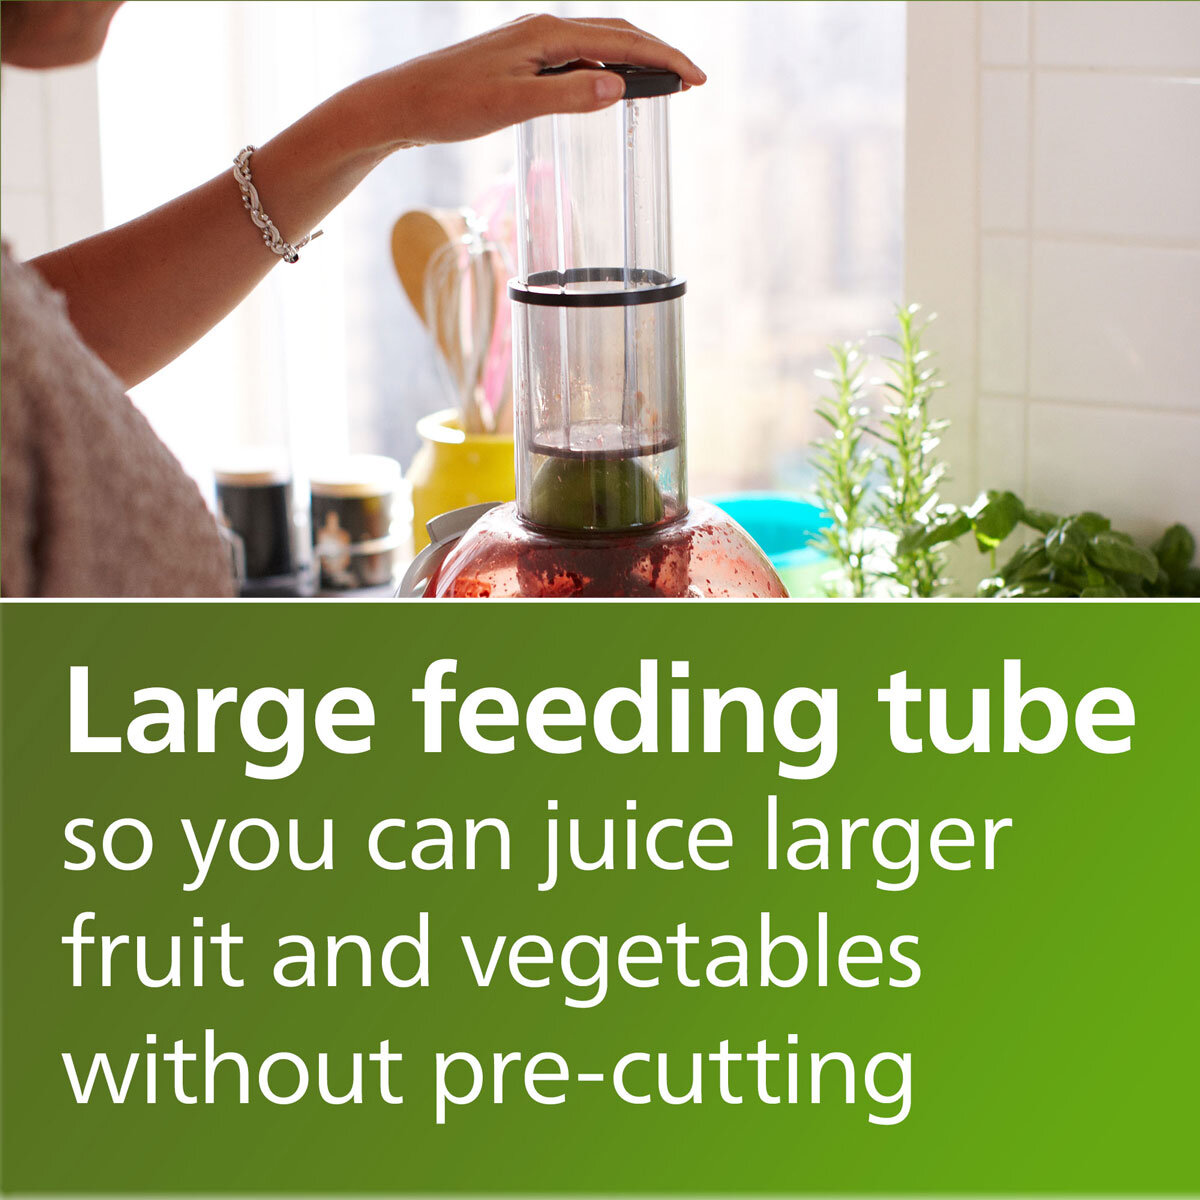 Description of feeding tube